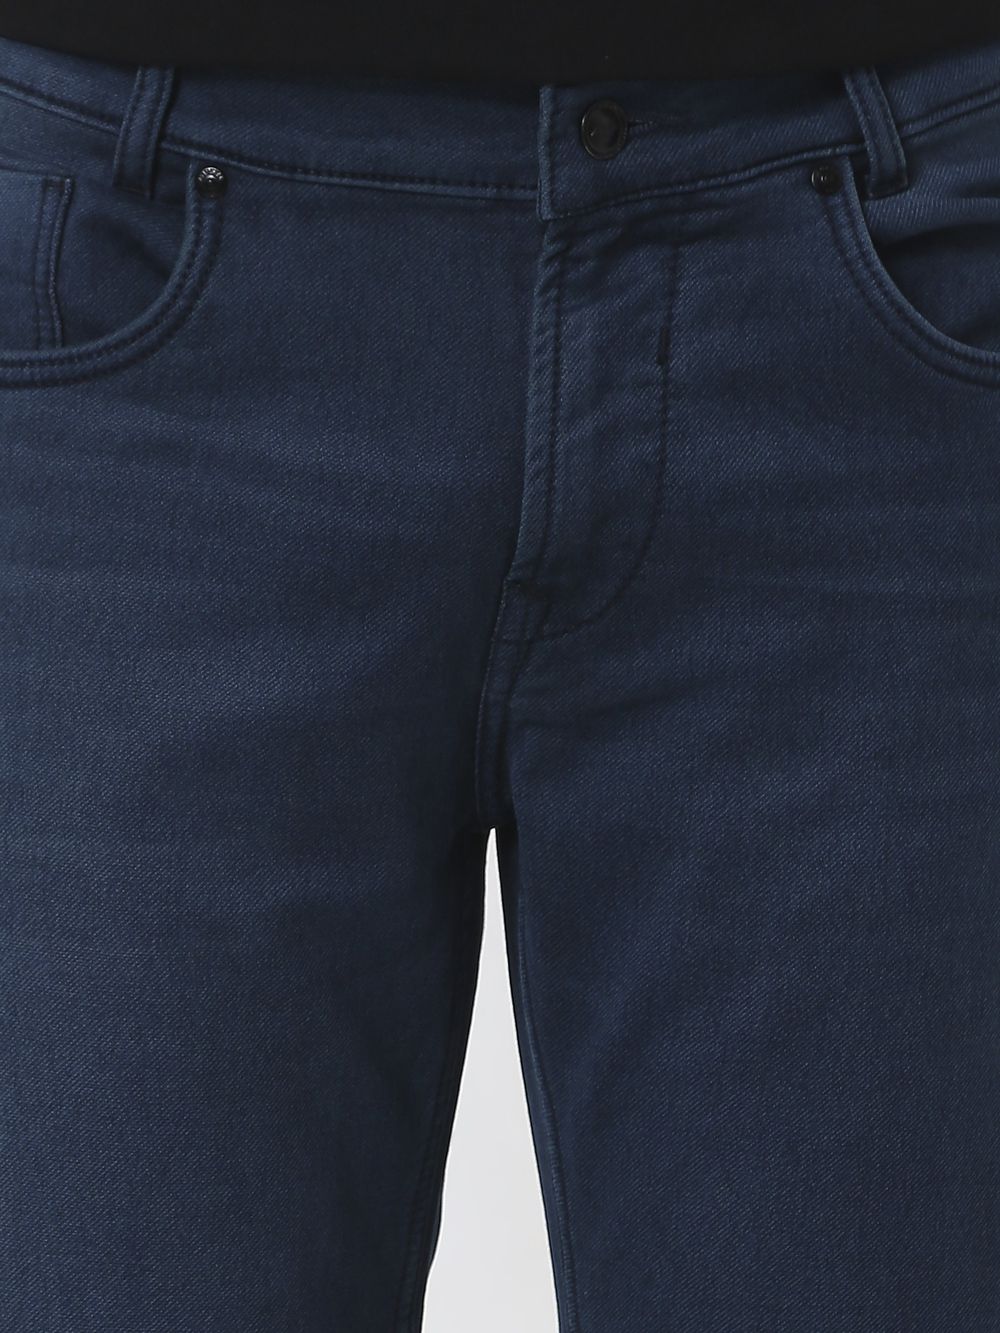 Deep Indigo Blue Narrow Fit Denim Deluxe Stretch Jeans